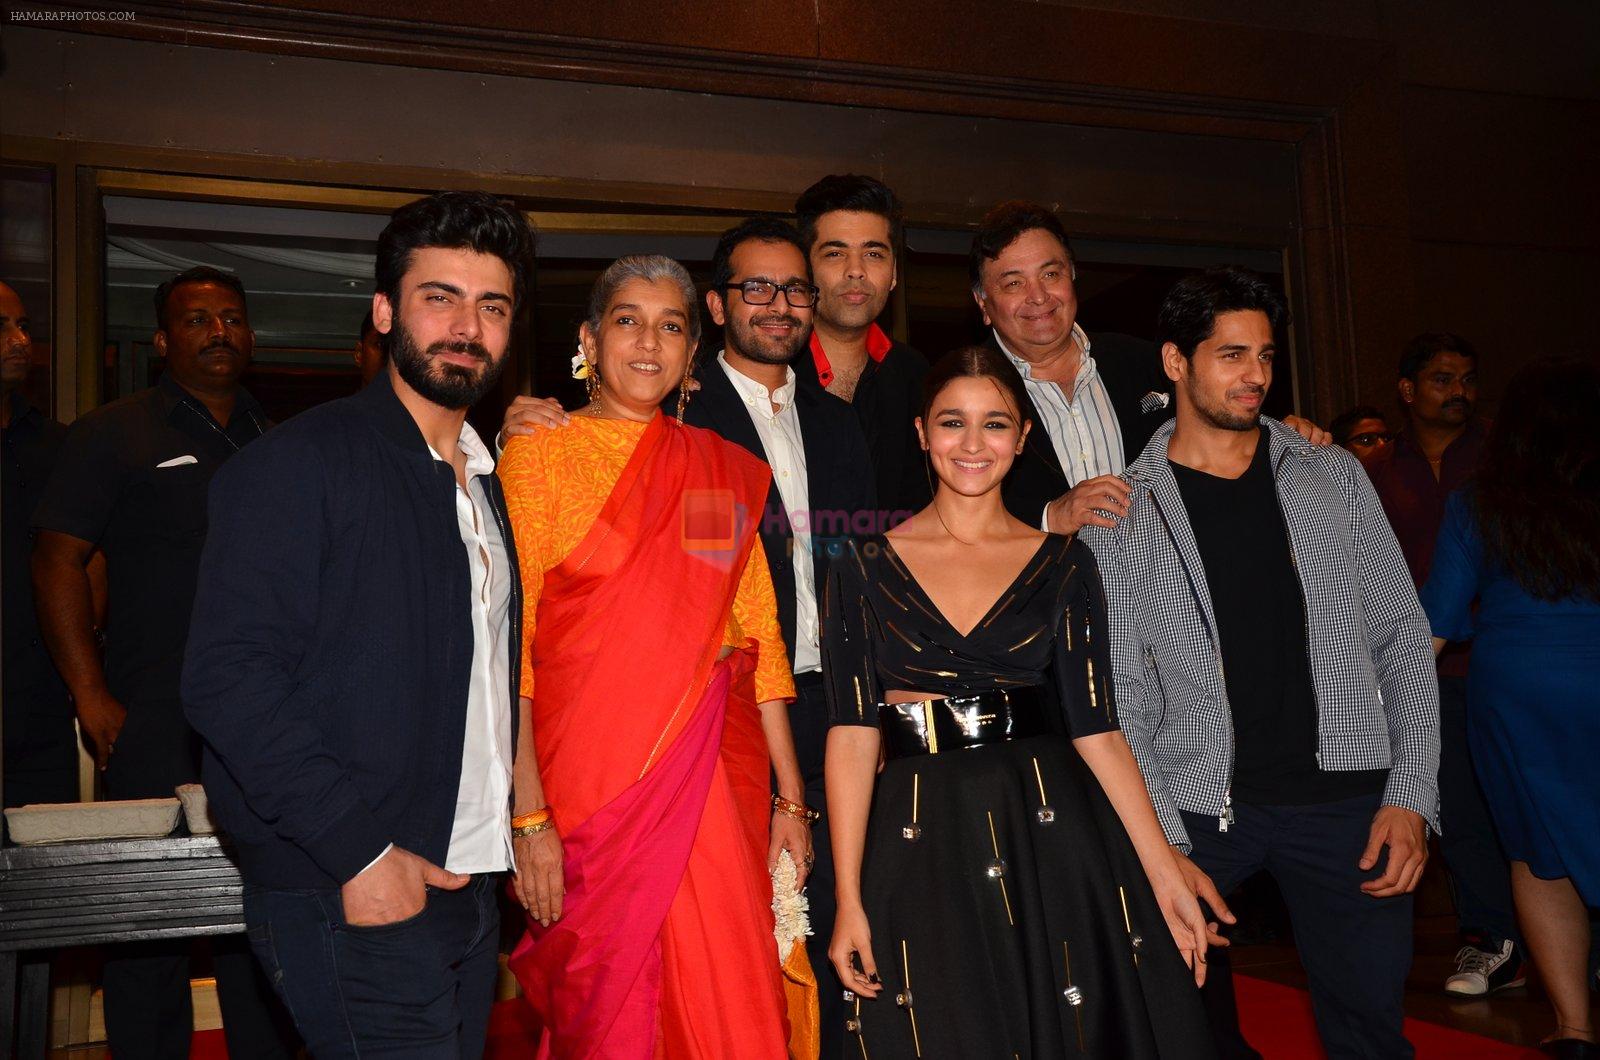 Alia Bhatt, Fawad Khan, Ratna Pathak Shah, Rishi Kapoor, Sidharth Malhotra, Karan Johar, Shakun Batra at Kapoor n Sons success bash on 3rd April 2016